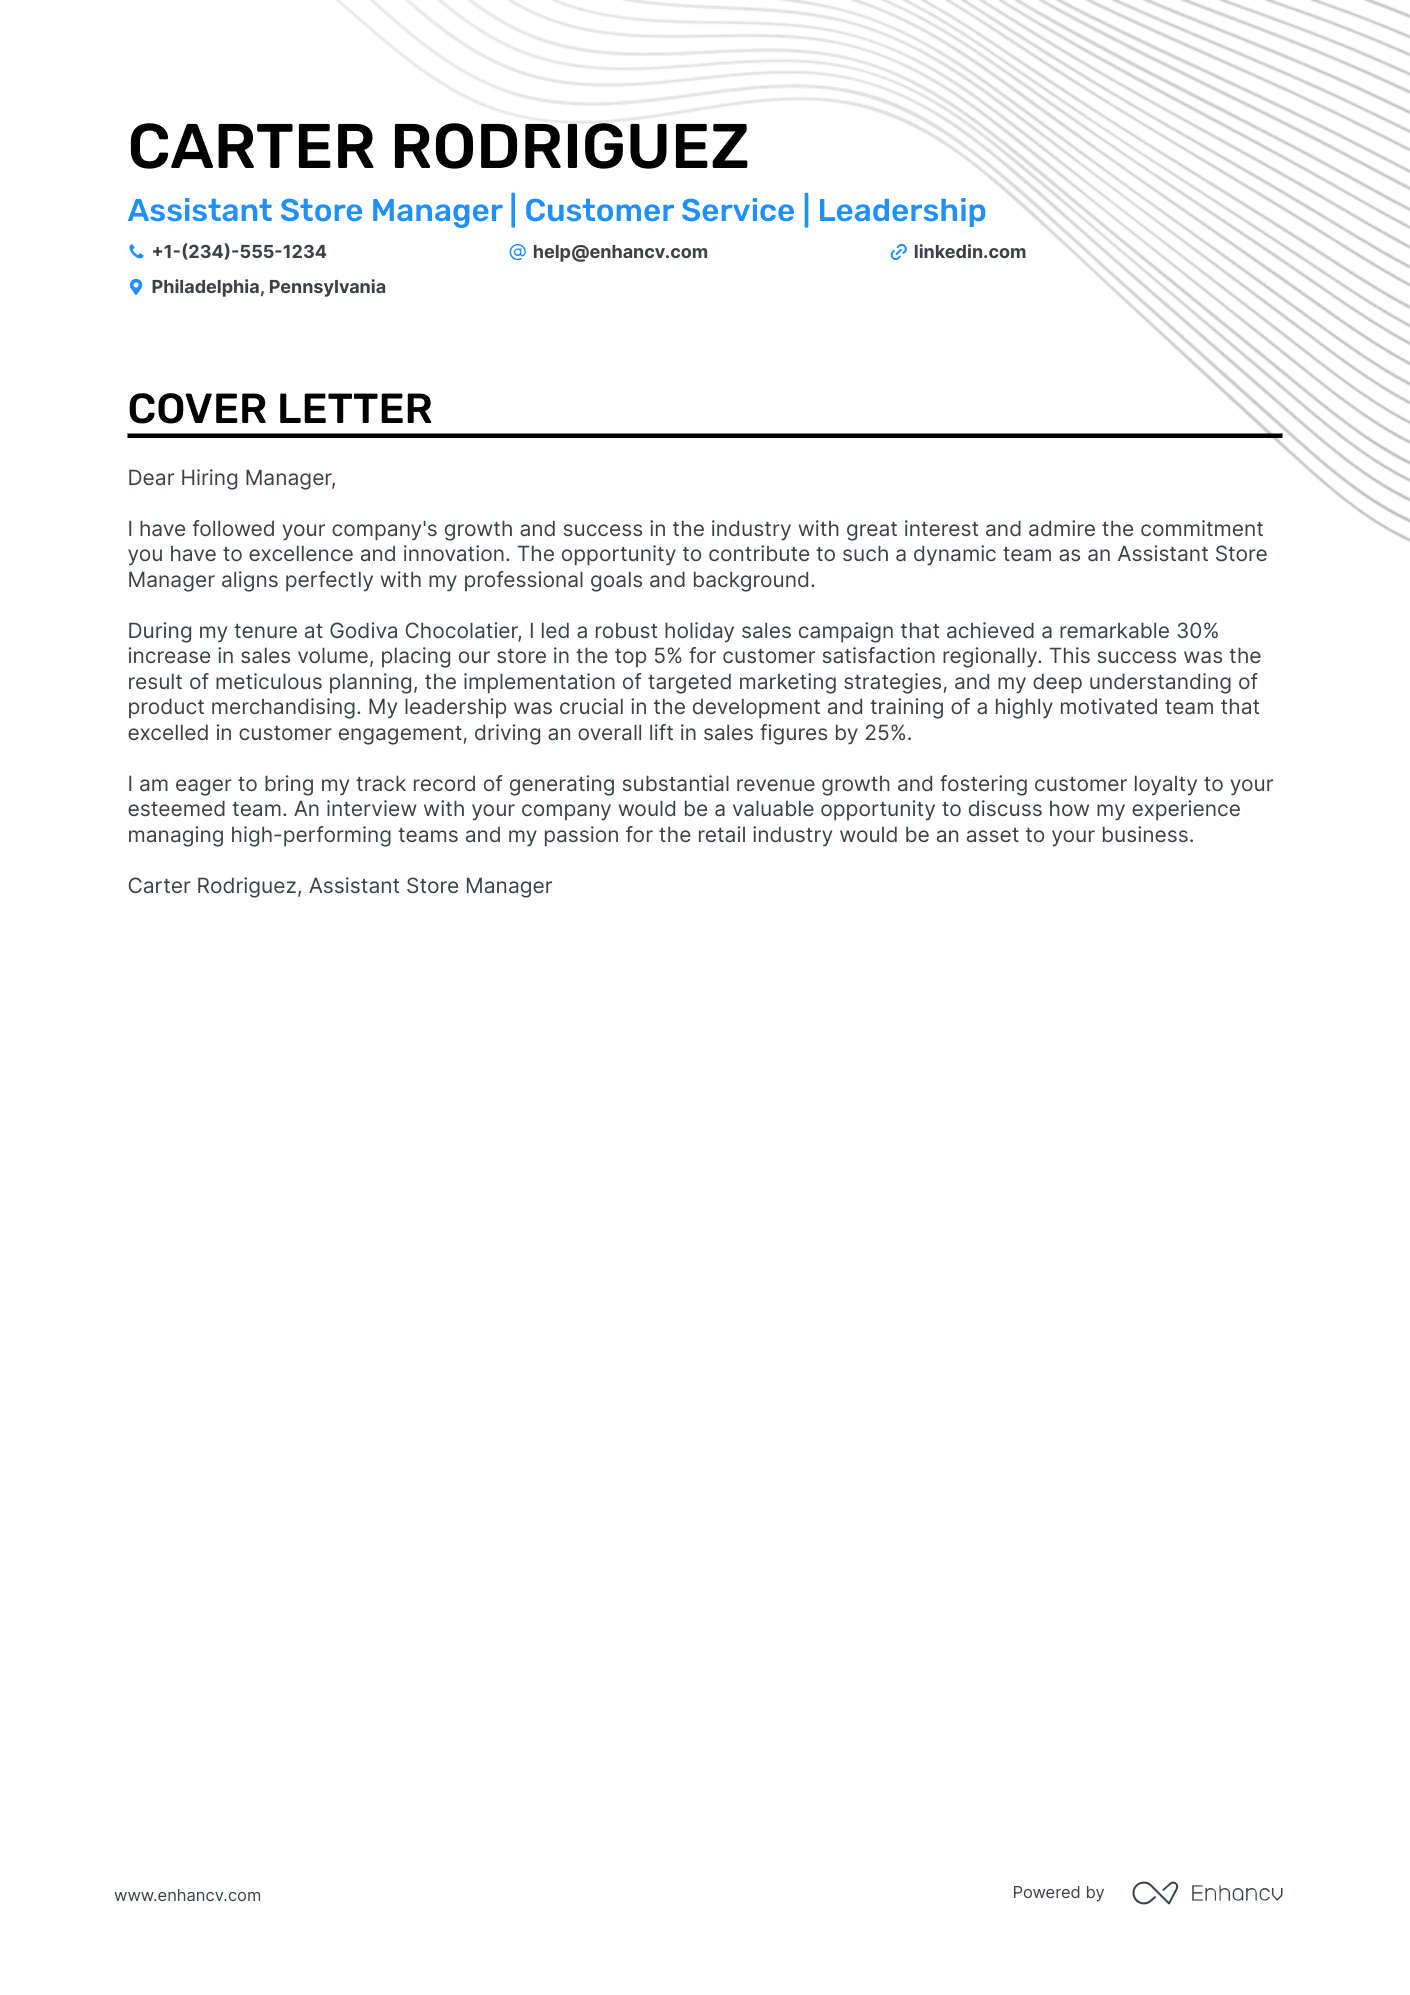 Deputy Manager cover letter